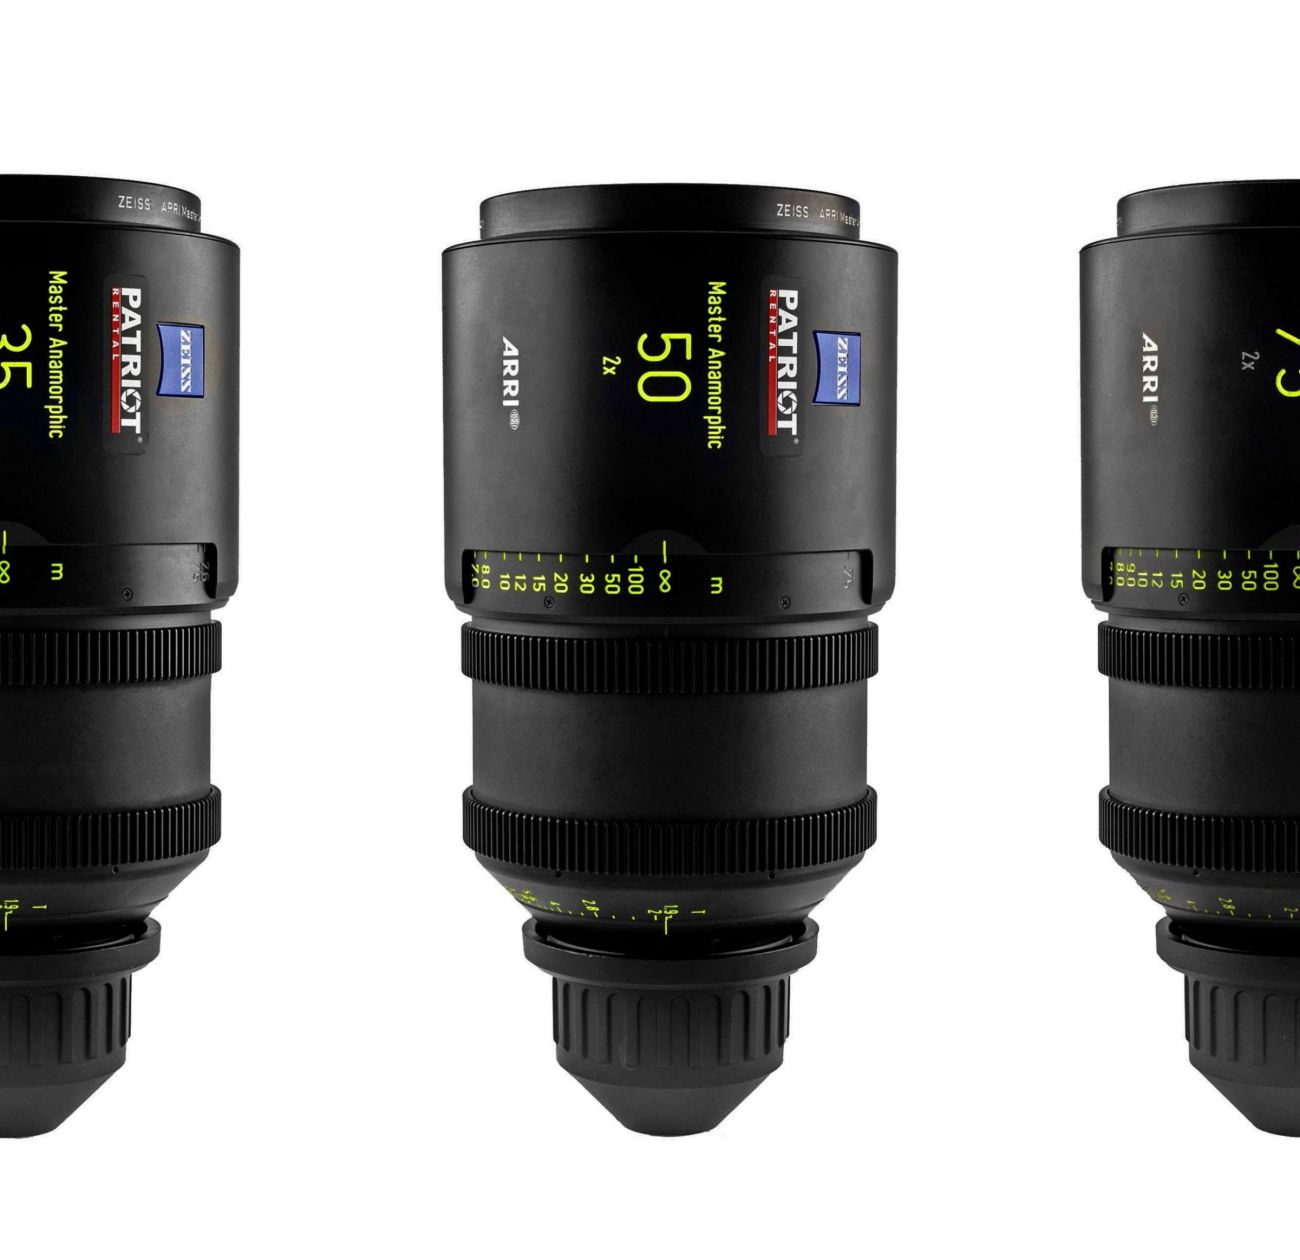 ARRI/ZEISS Master Anamorphic 2x Lenses T1.9 35,50,75,135mm SET